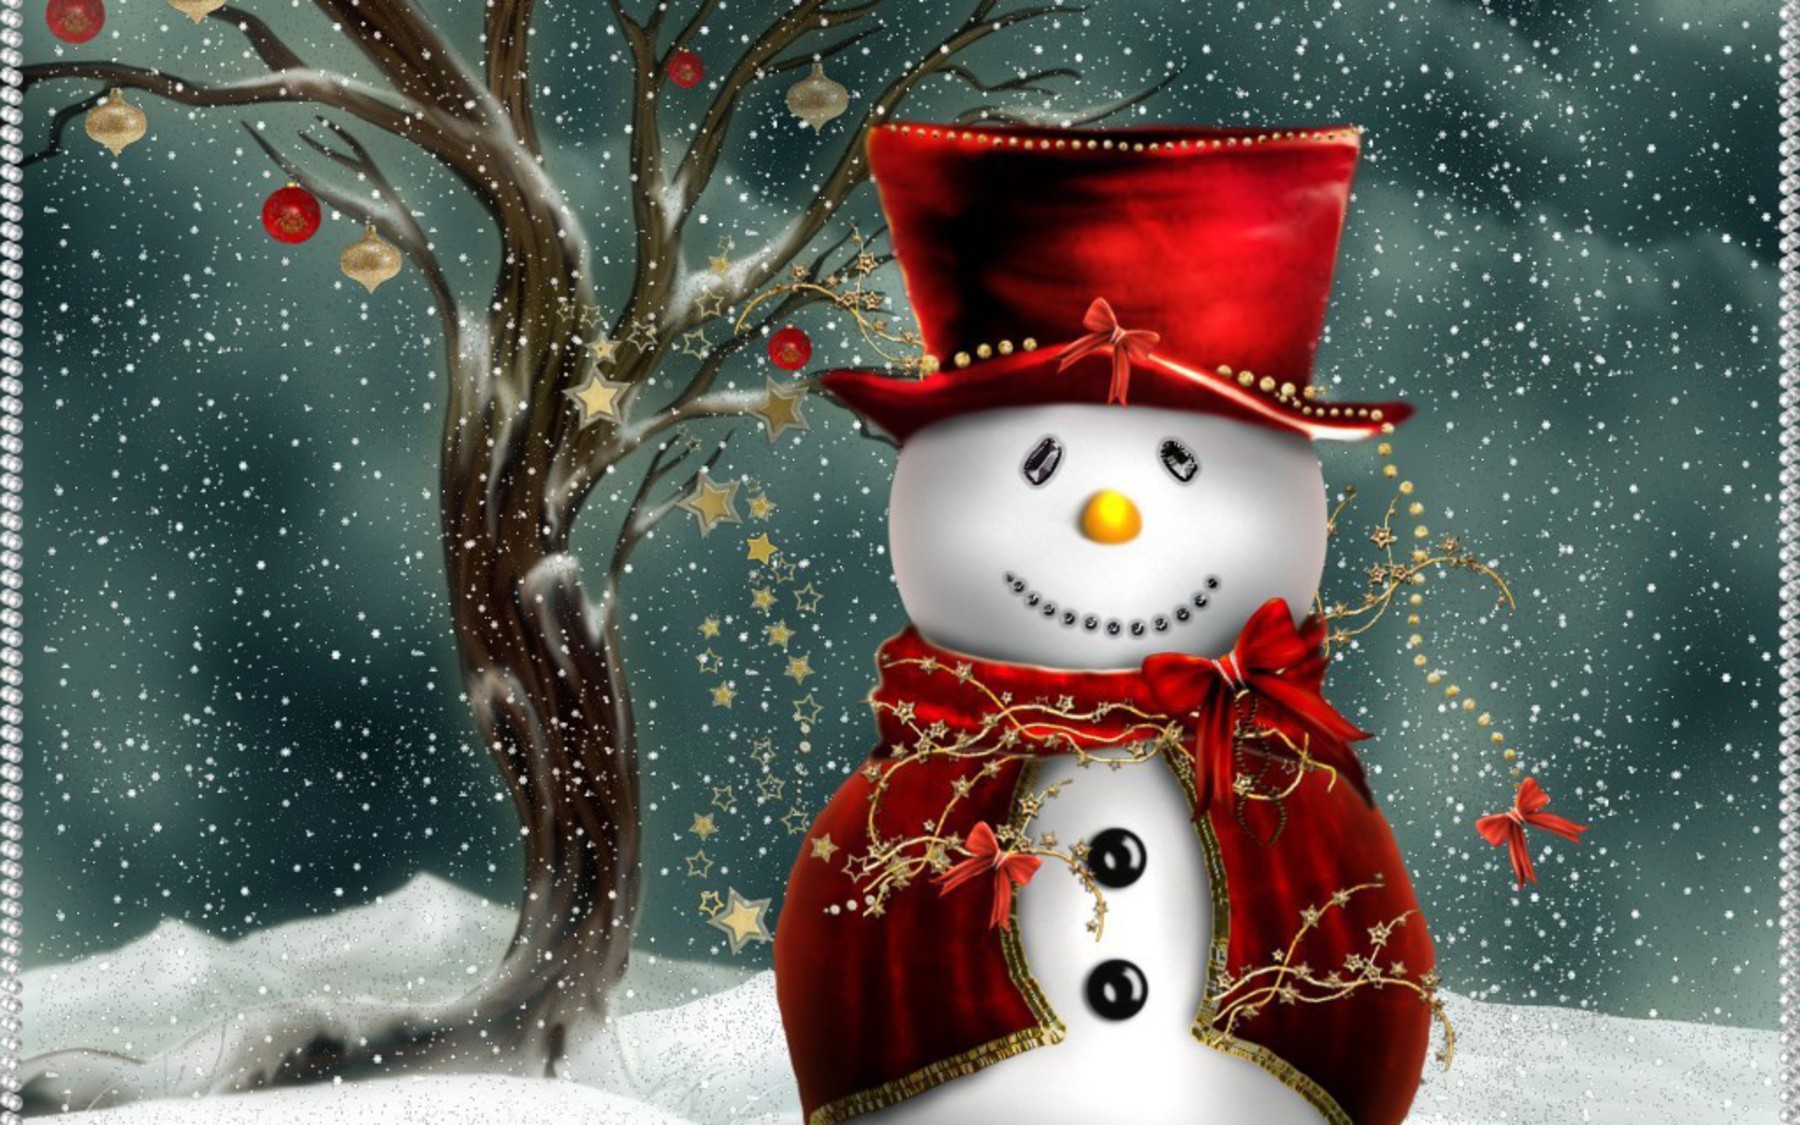 Christmas ornaments, snowflake, snowman with hat, snow. Frosty The Snowman desktop wallpaper.